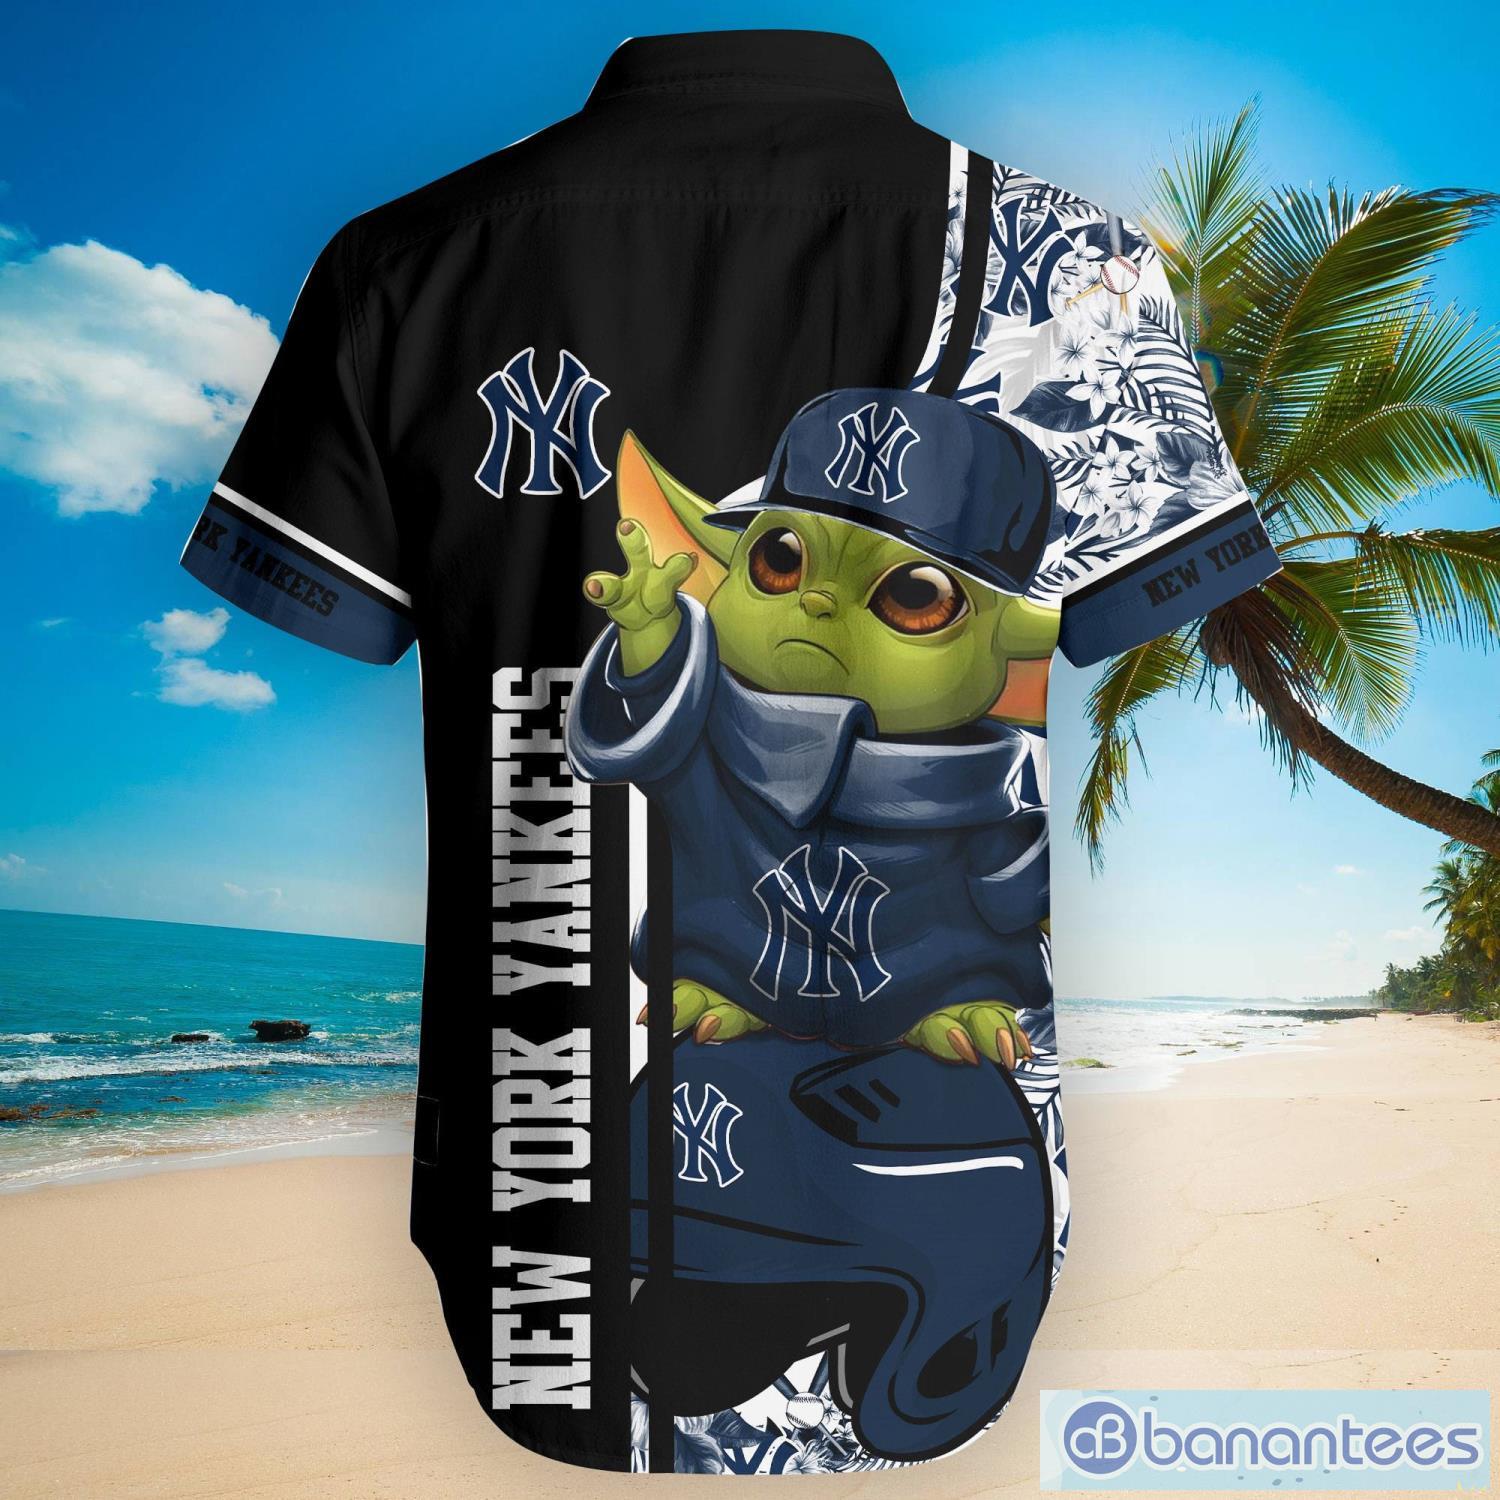 Baby Yoda Yankees Fan Lovers T-Shirt